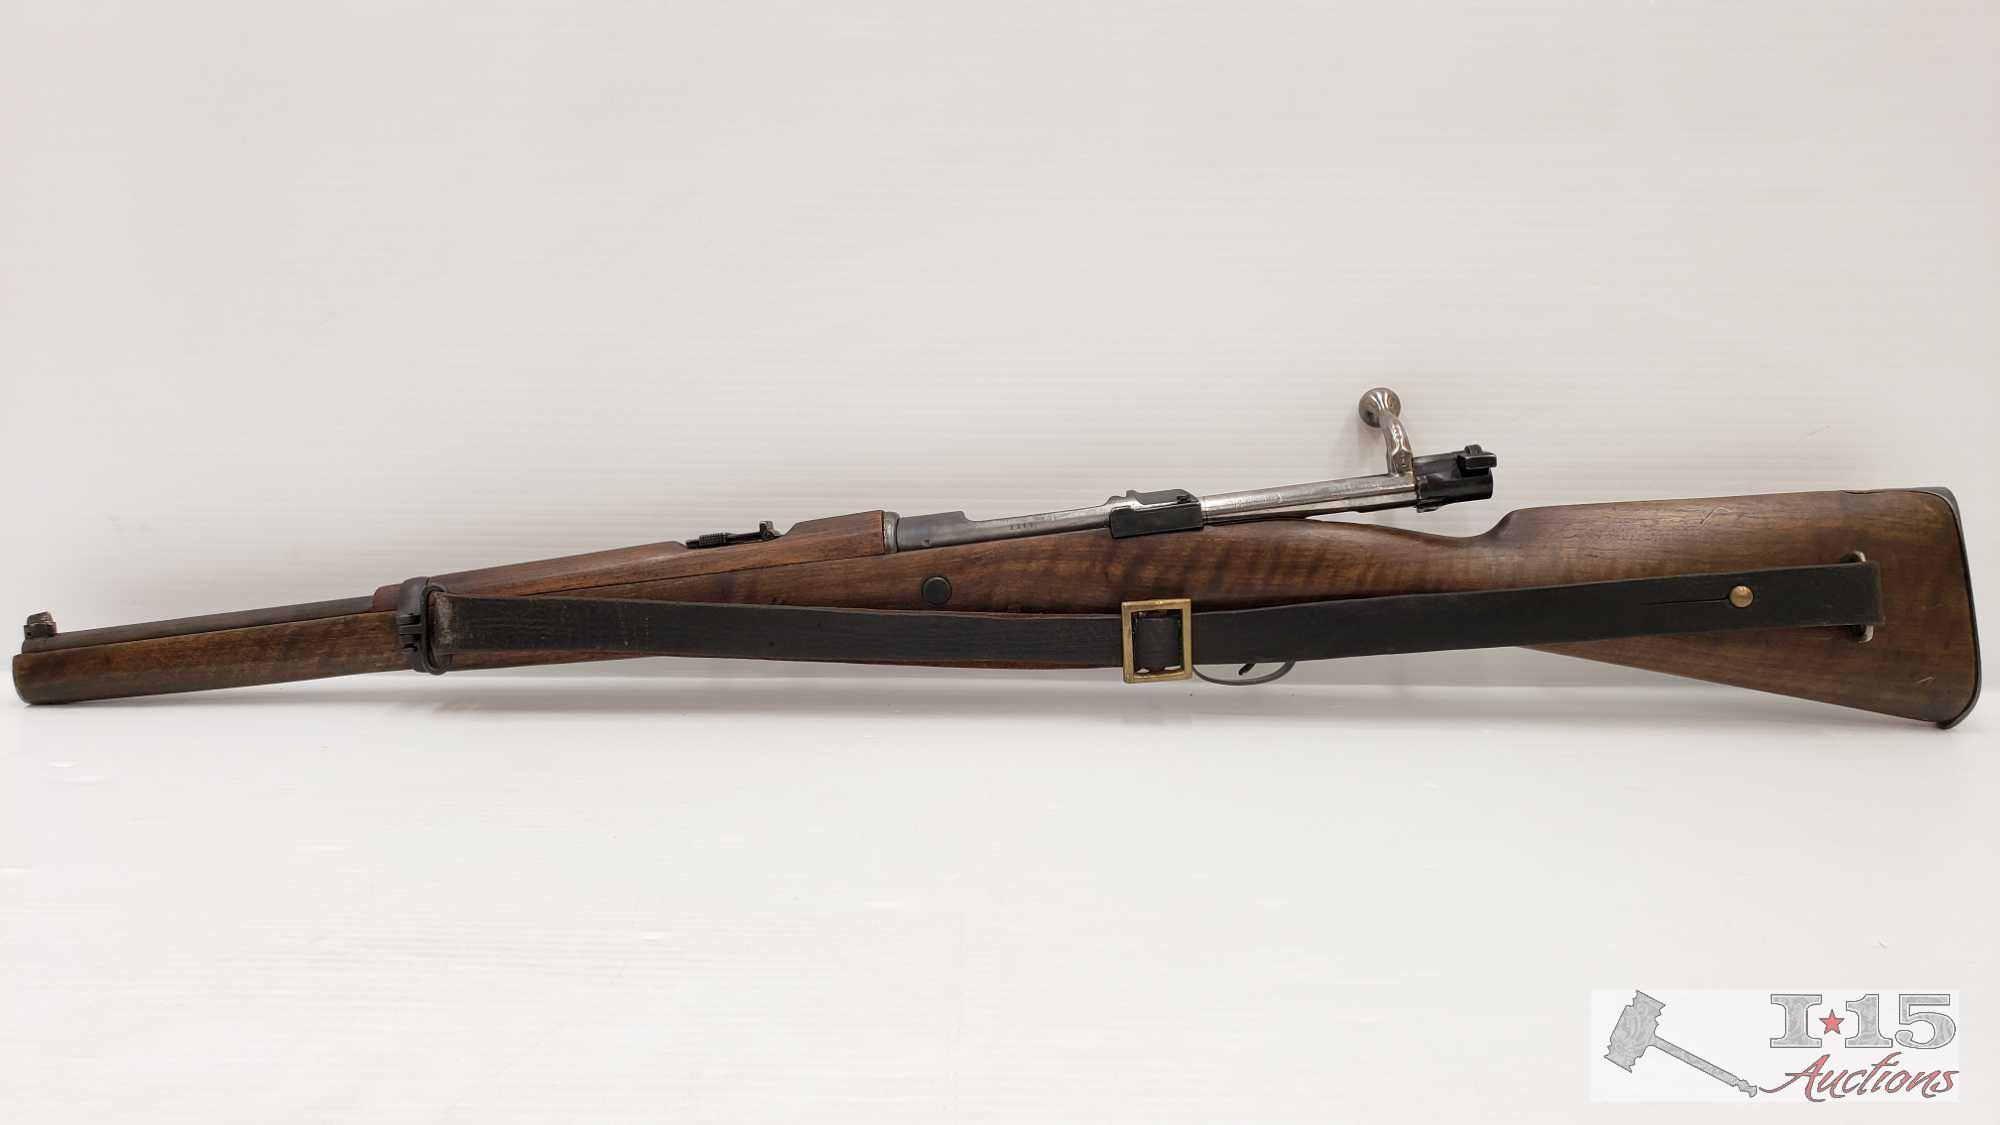 Mauser M95 .308 Bolt Action Rifle